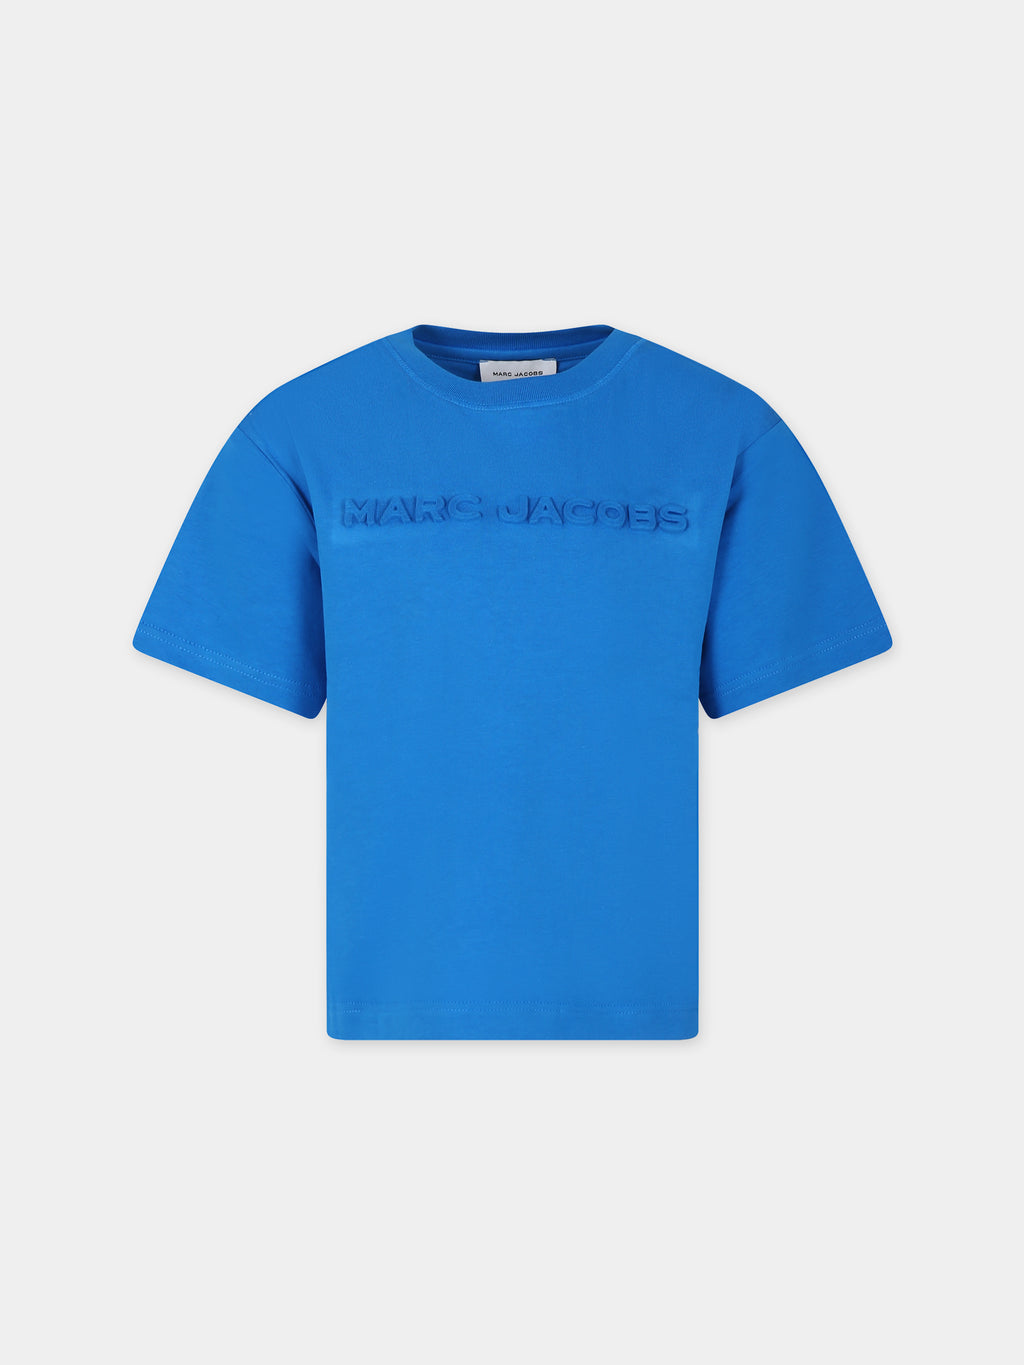 T-shirt bleu pour enfants avec logo